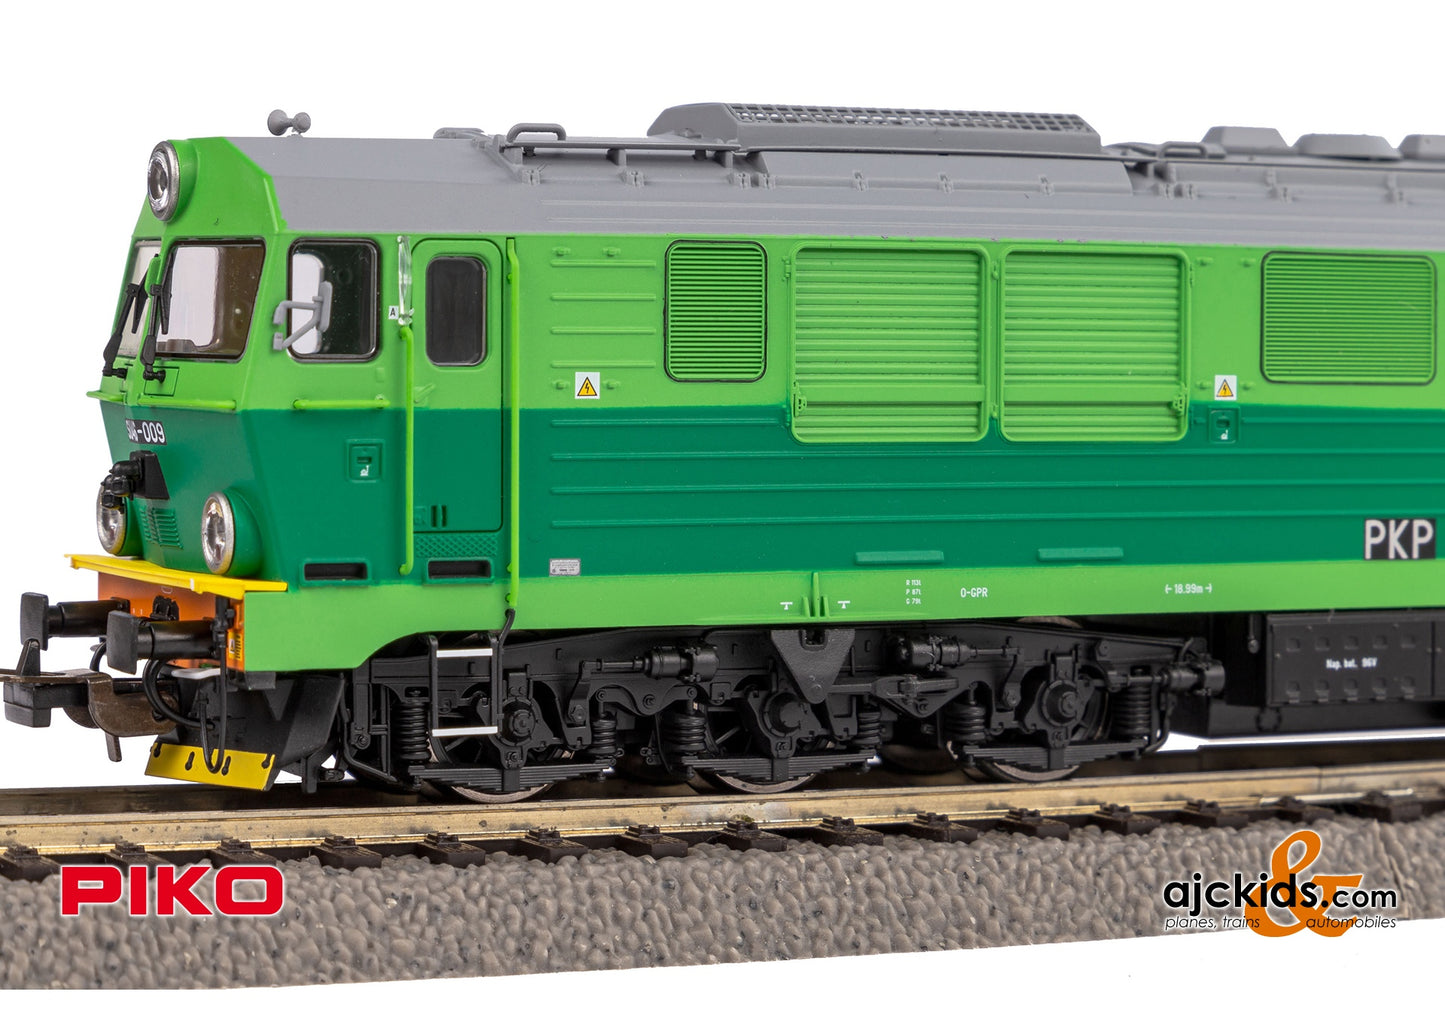 Piko 52870 - SU46 Diesel Locomotive PKP IV